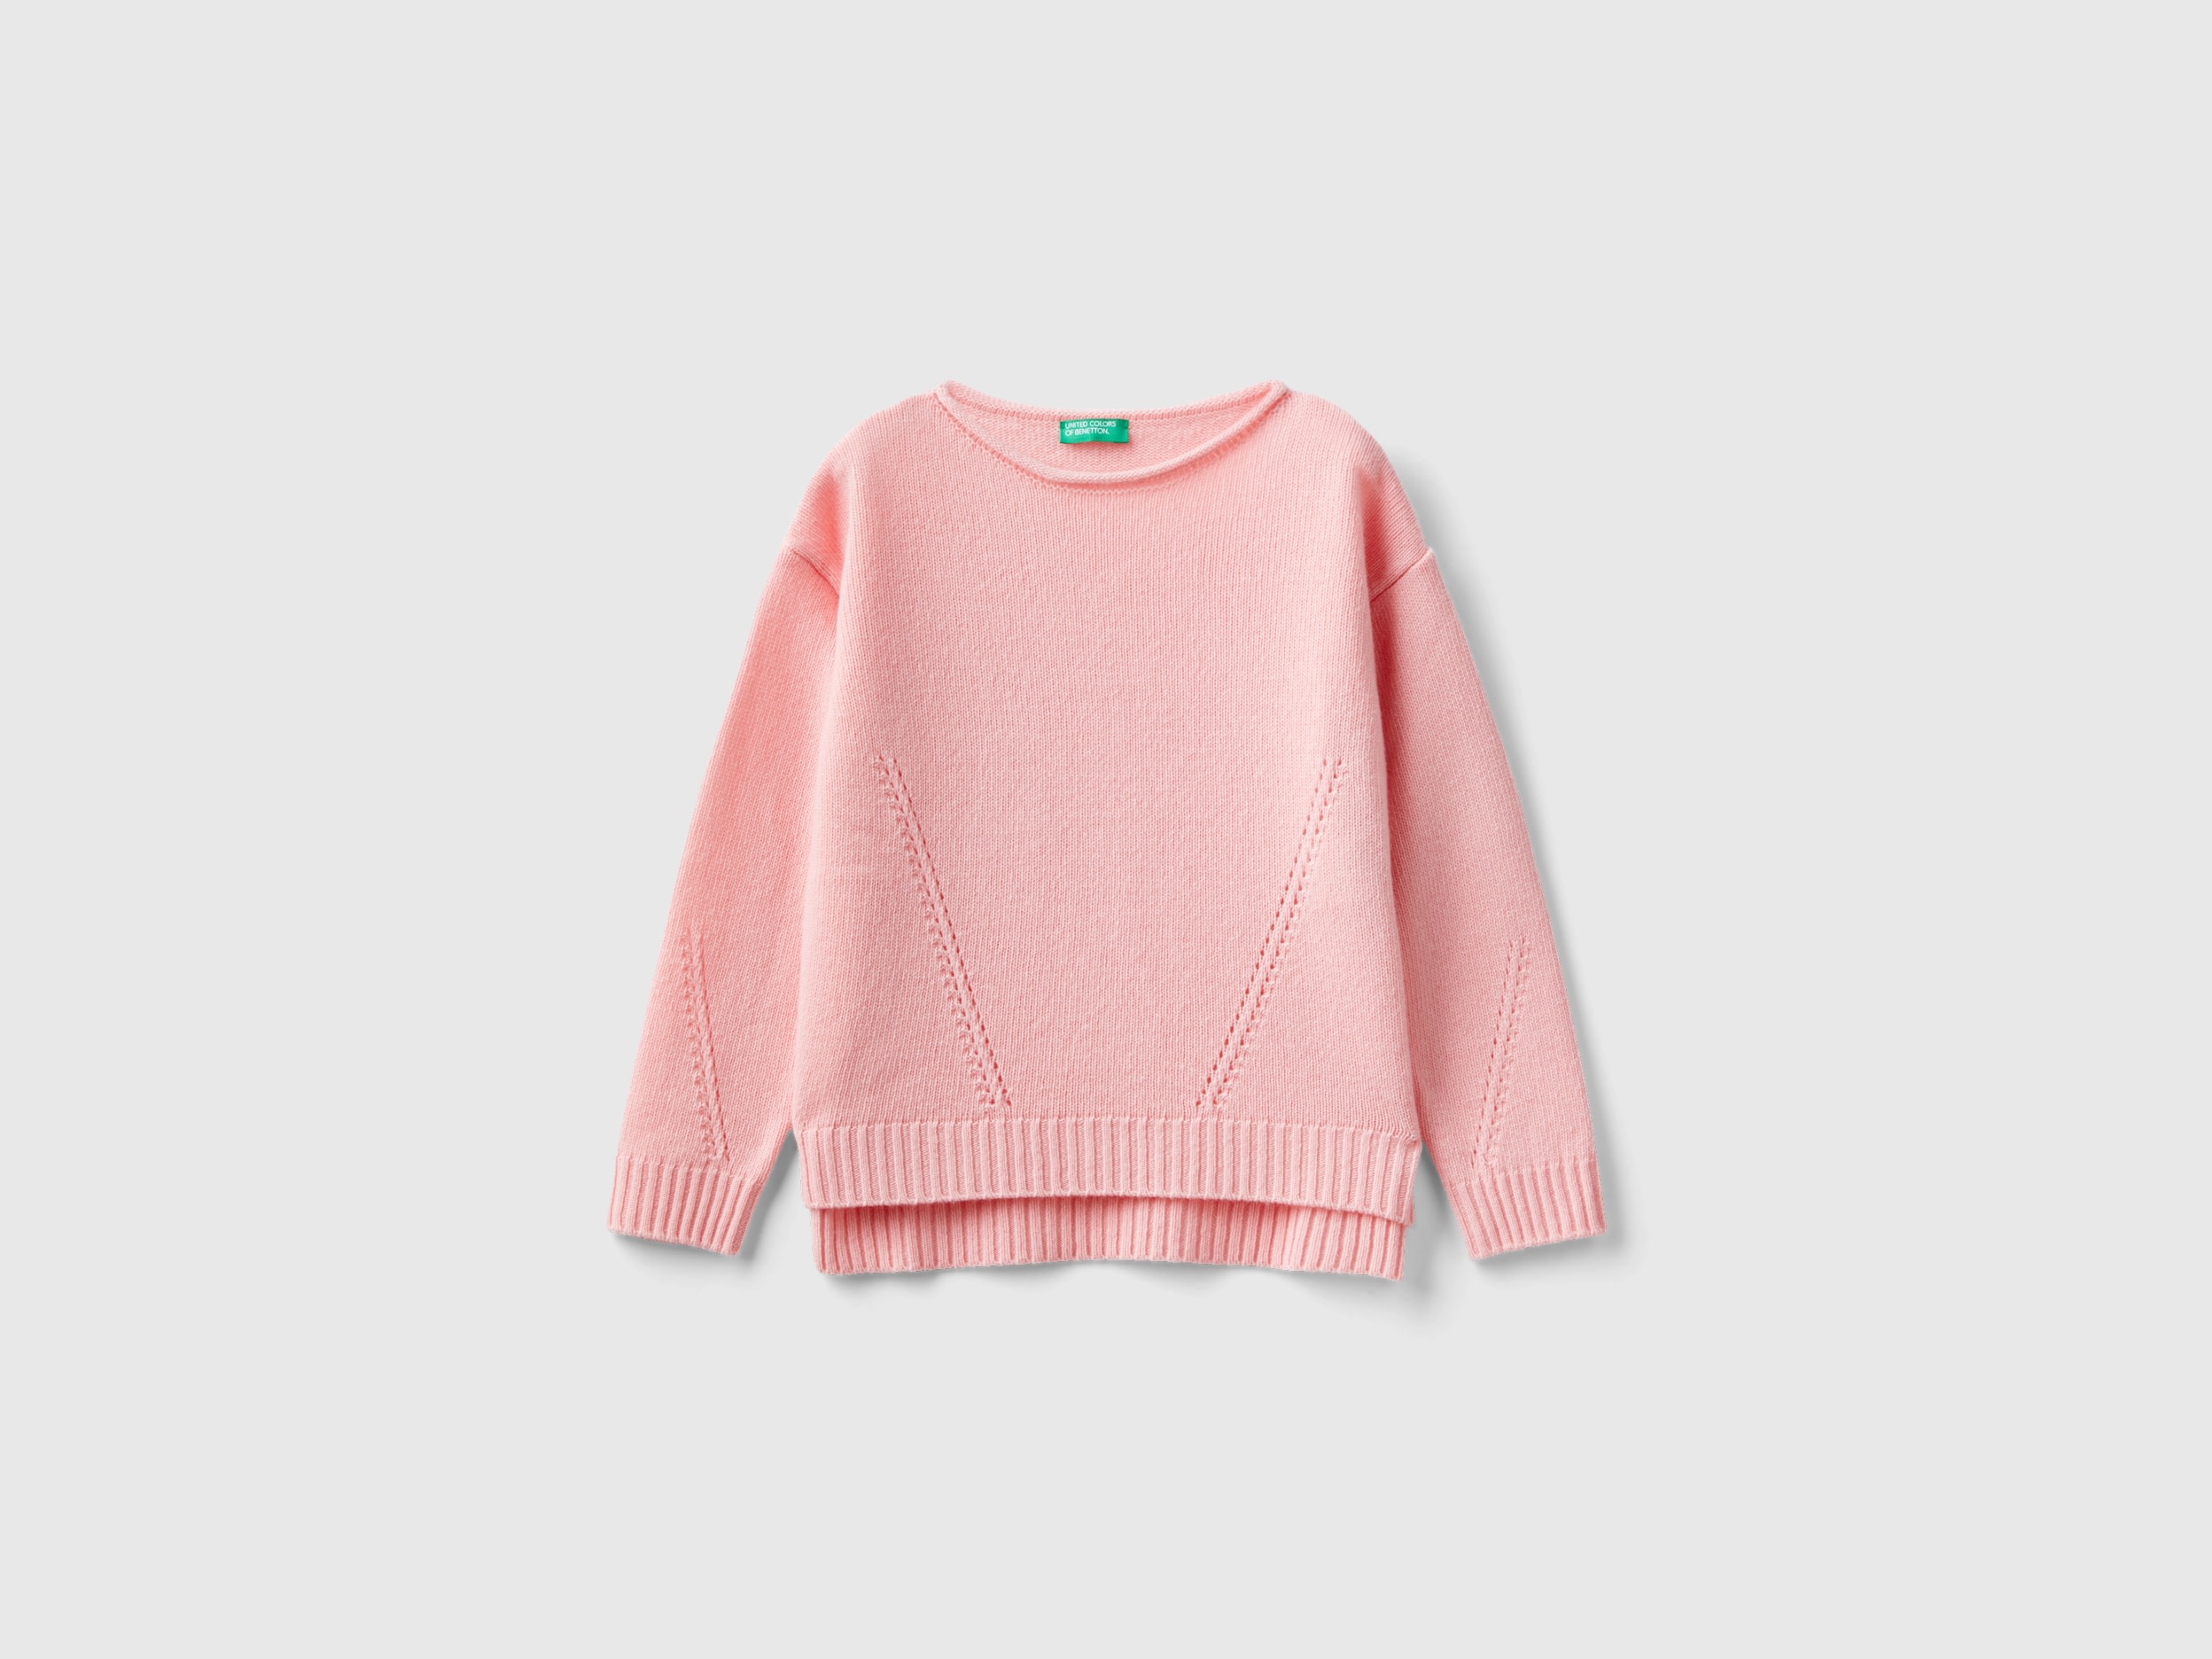 Benetton, Knit Sweater With Playful Stitching, size M, Pink, Kids